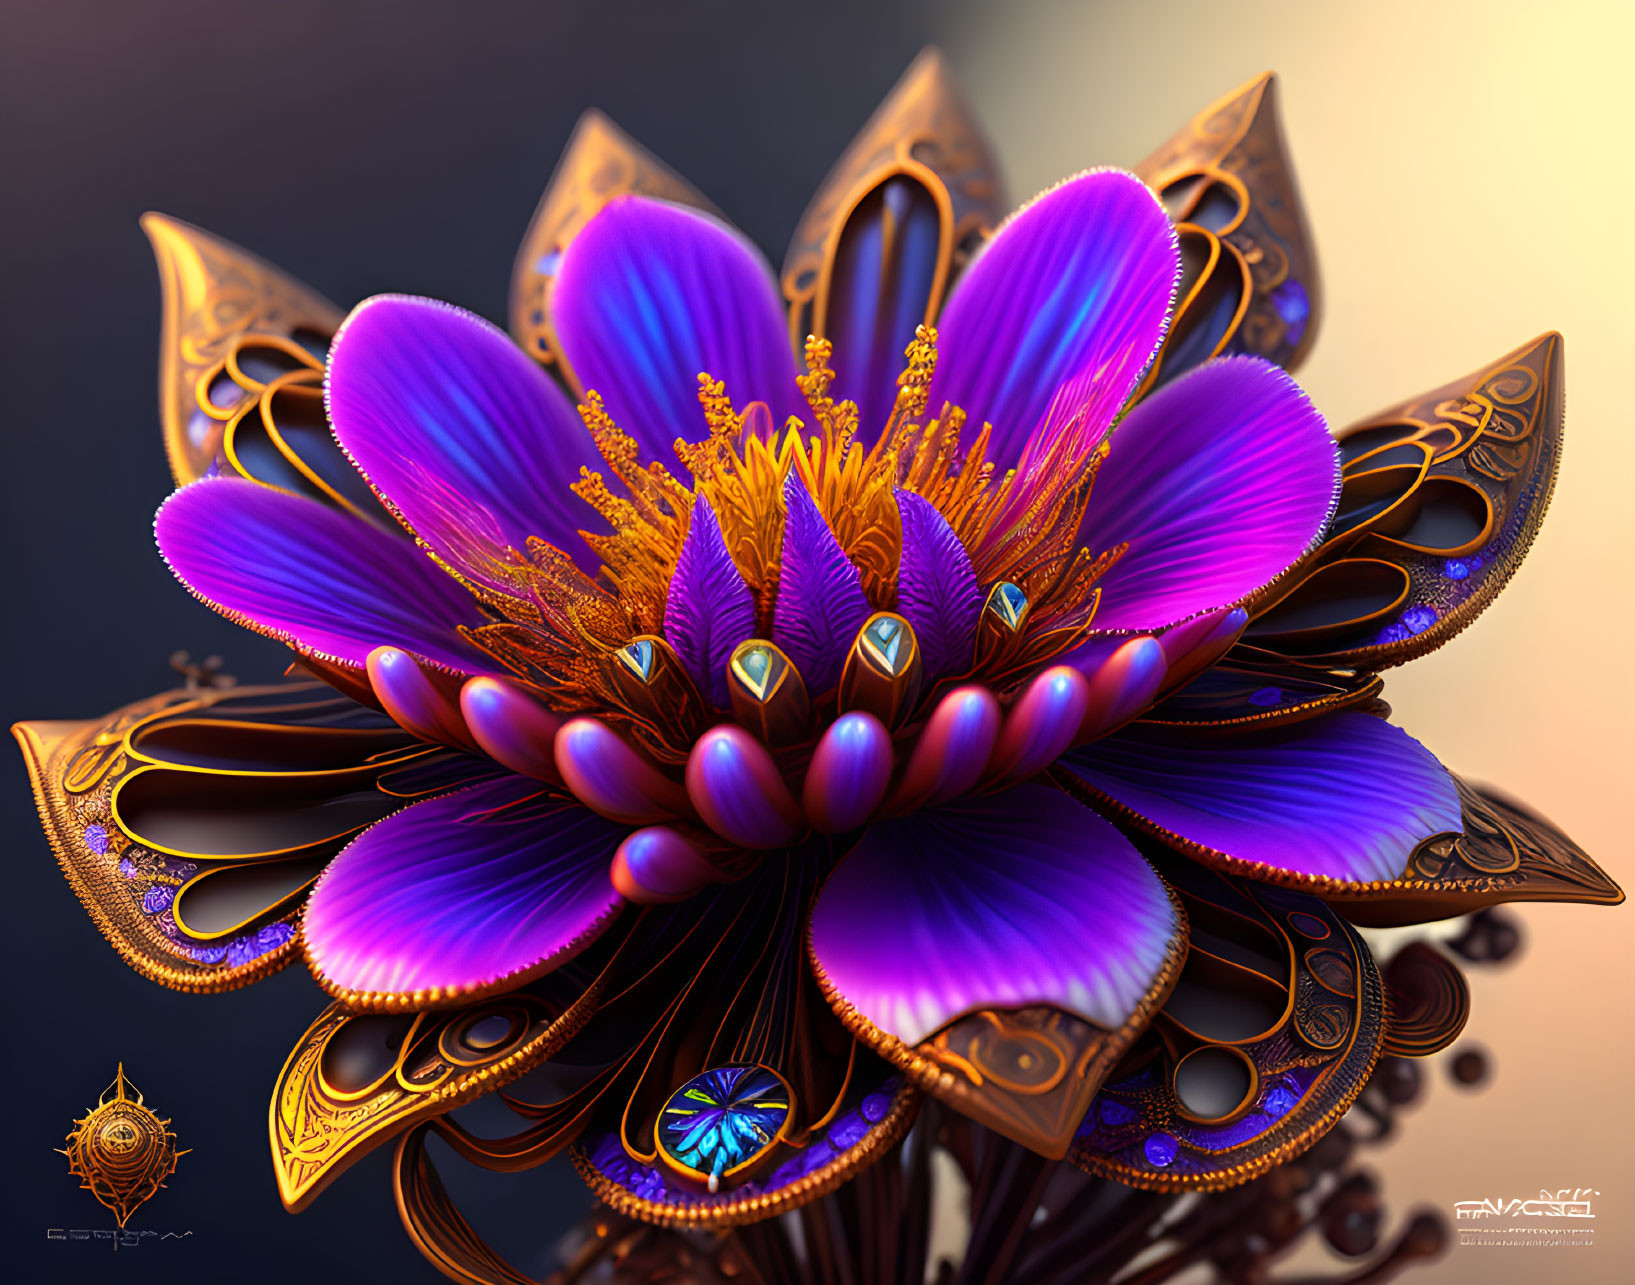 Vivid Digital Art: Fantastical Flower in Purple and Gold